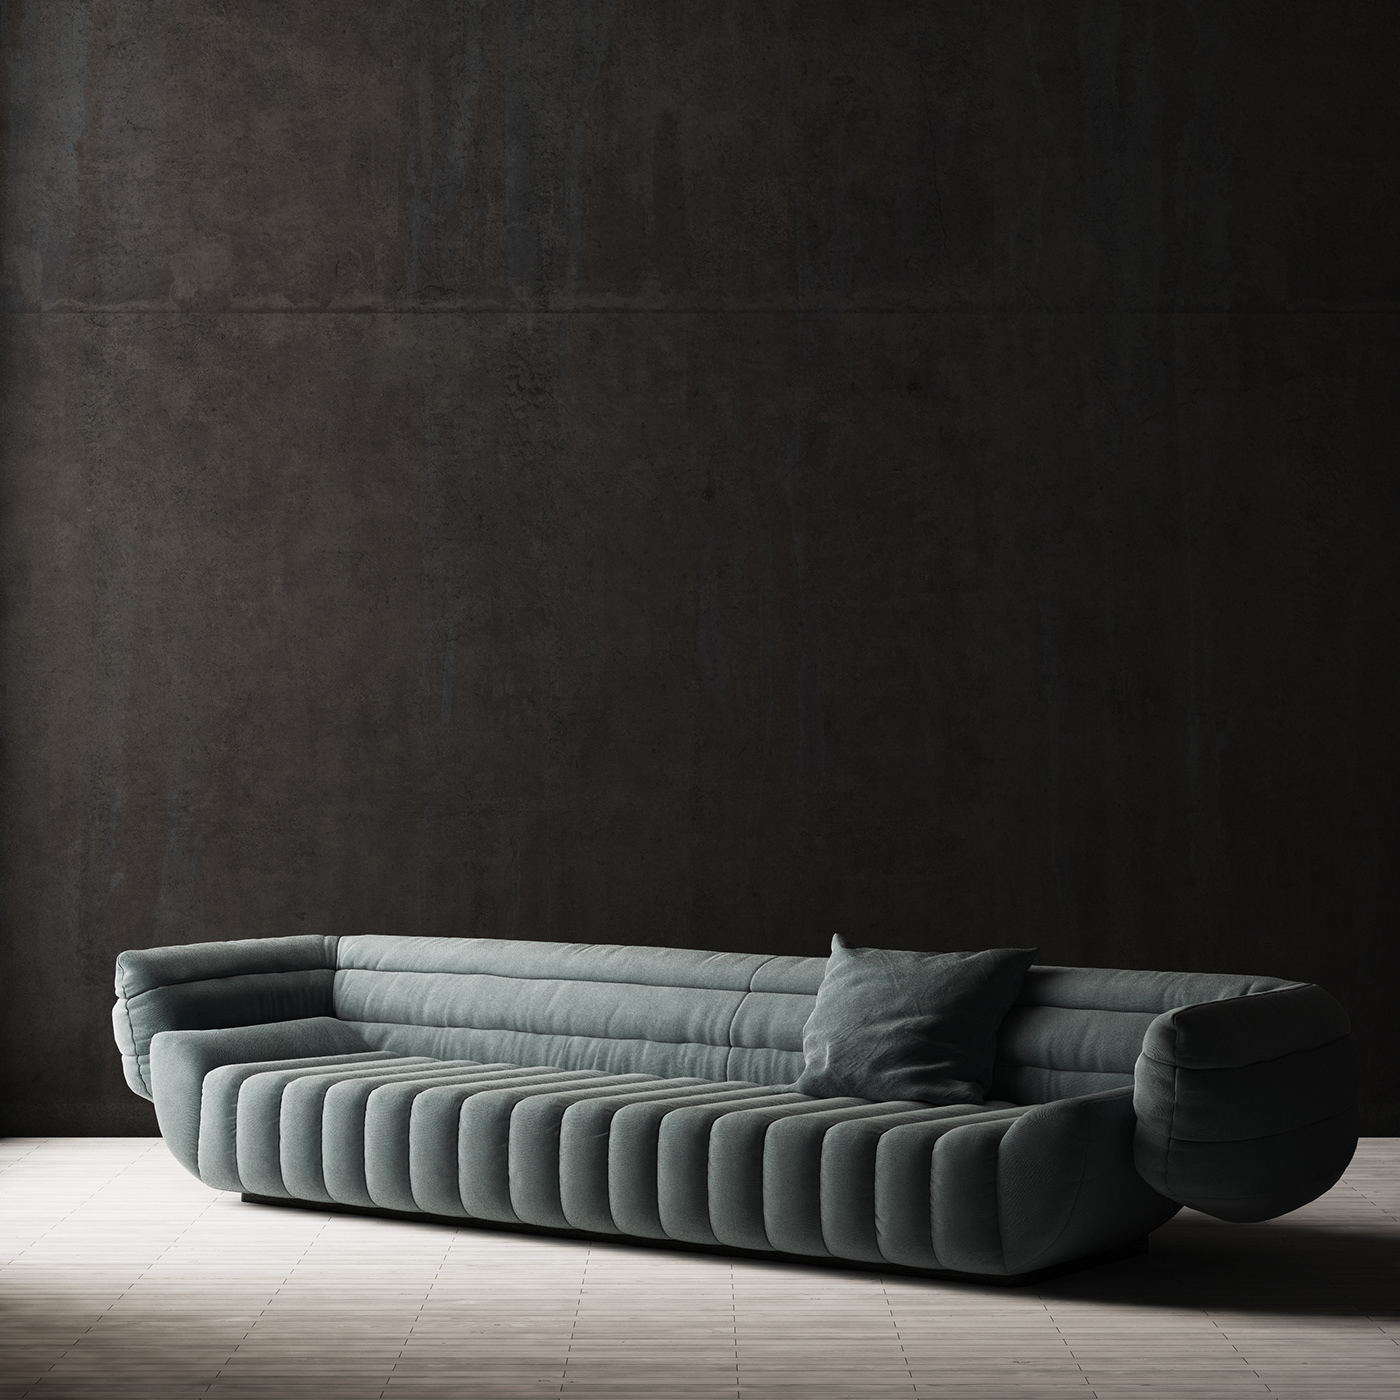 sofa interior design  design black styling  Style baxter Italy art